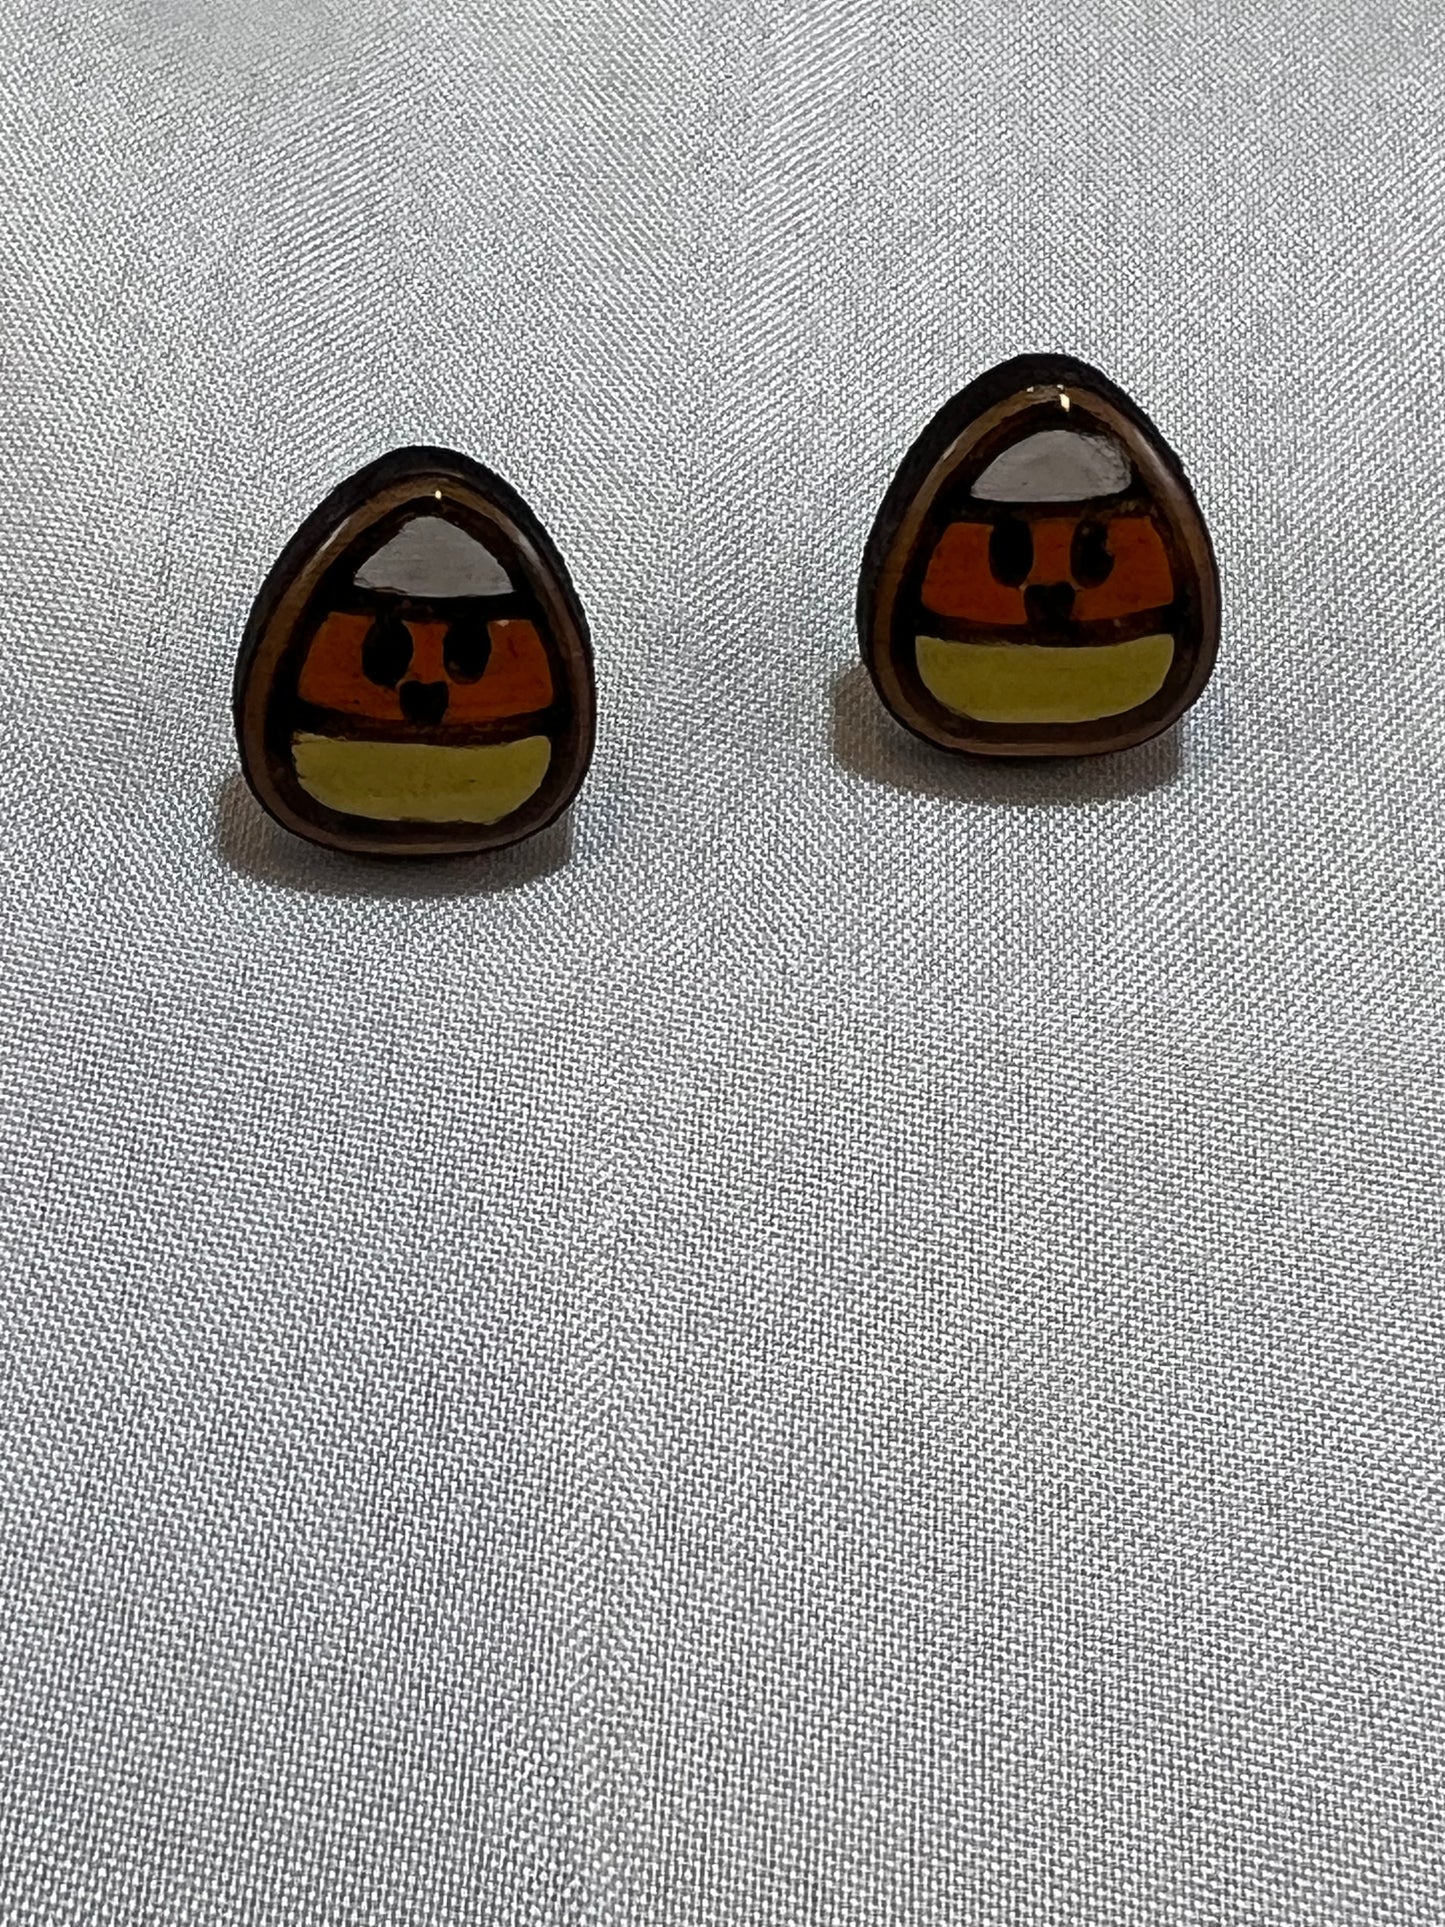 Halloween Candy Corn Earrings  - Handmade Earring Pair